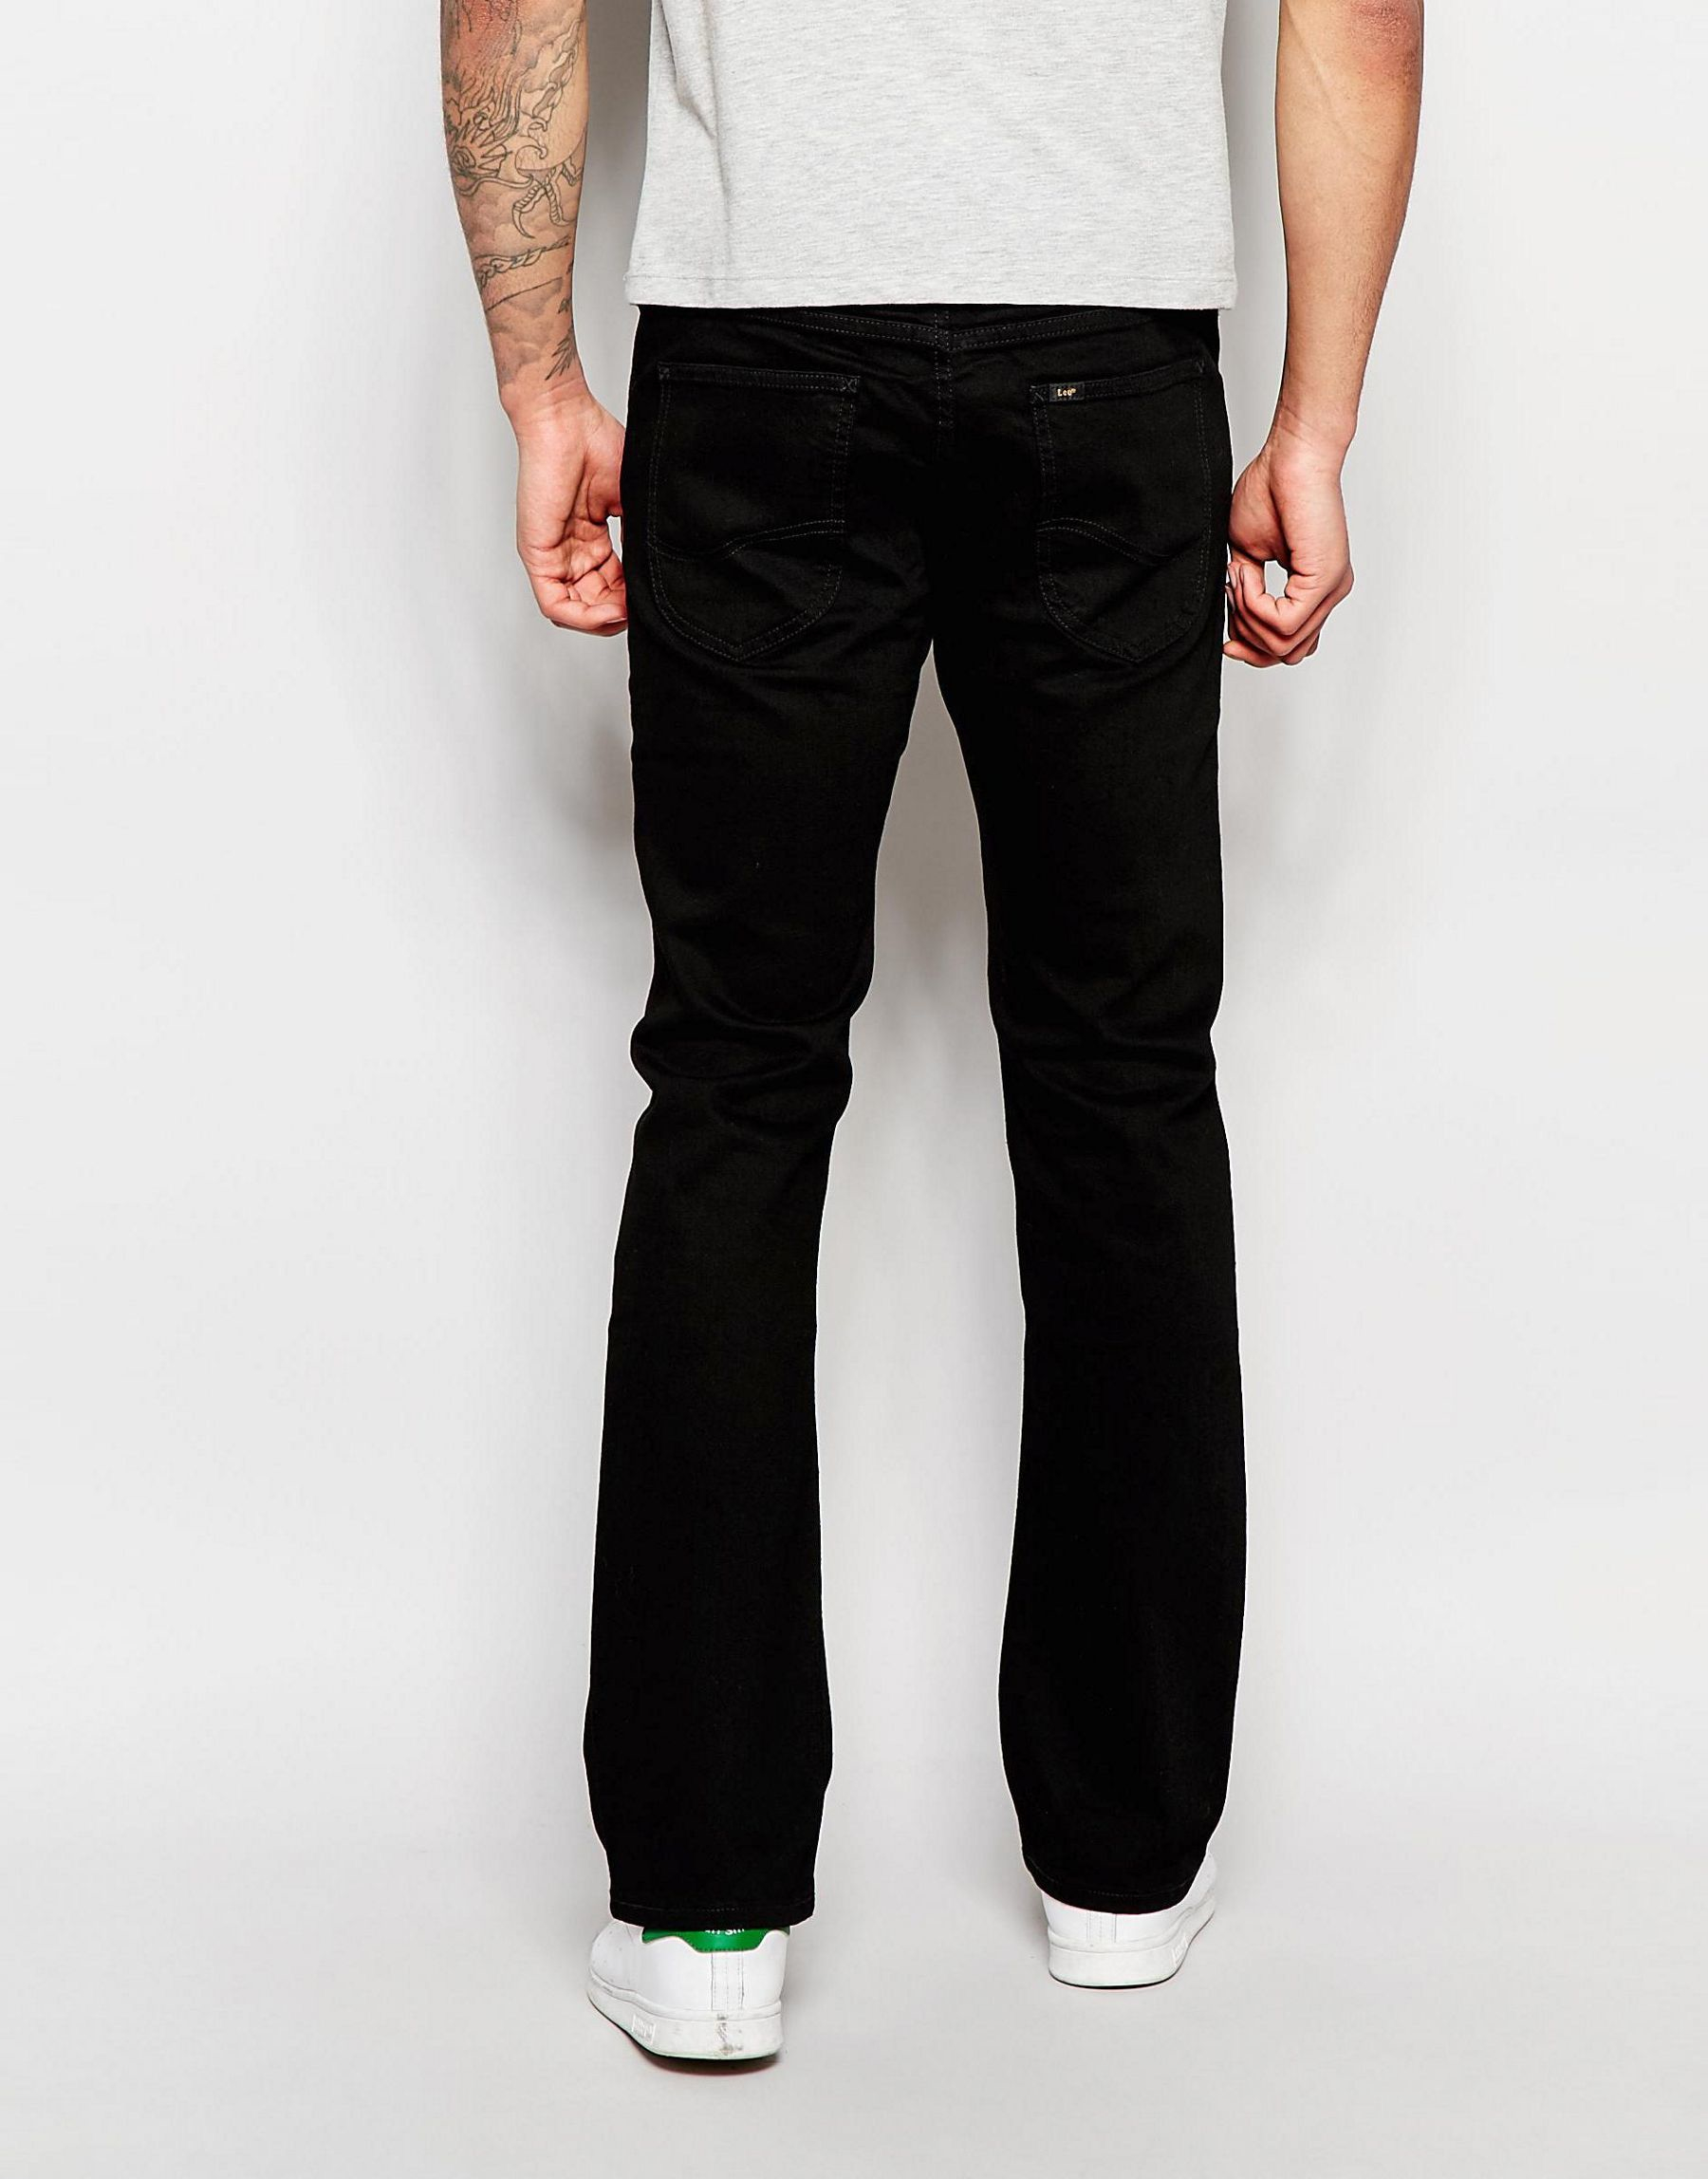 Lyst - Lee Jeans Jeans Trenton Stretch Slim Bootcut Fit Clean Black ...